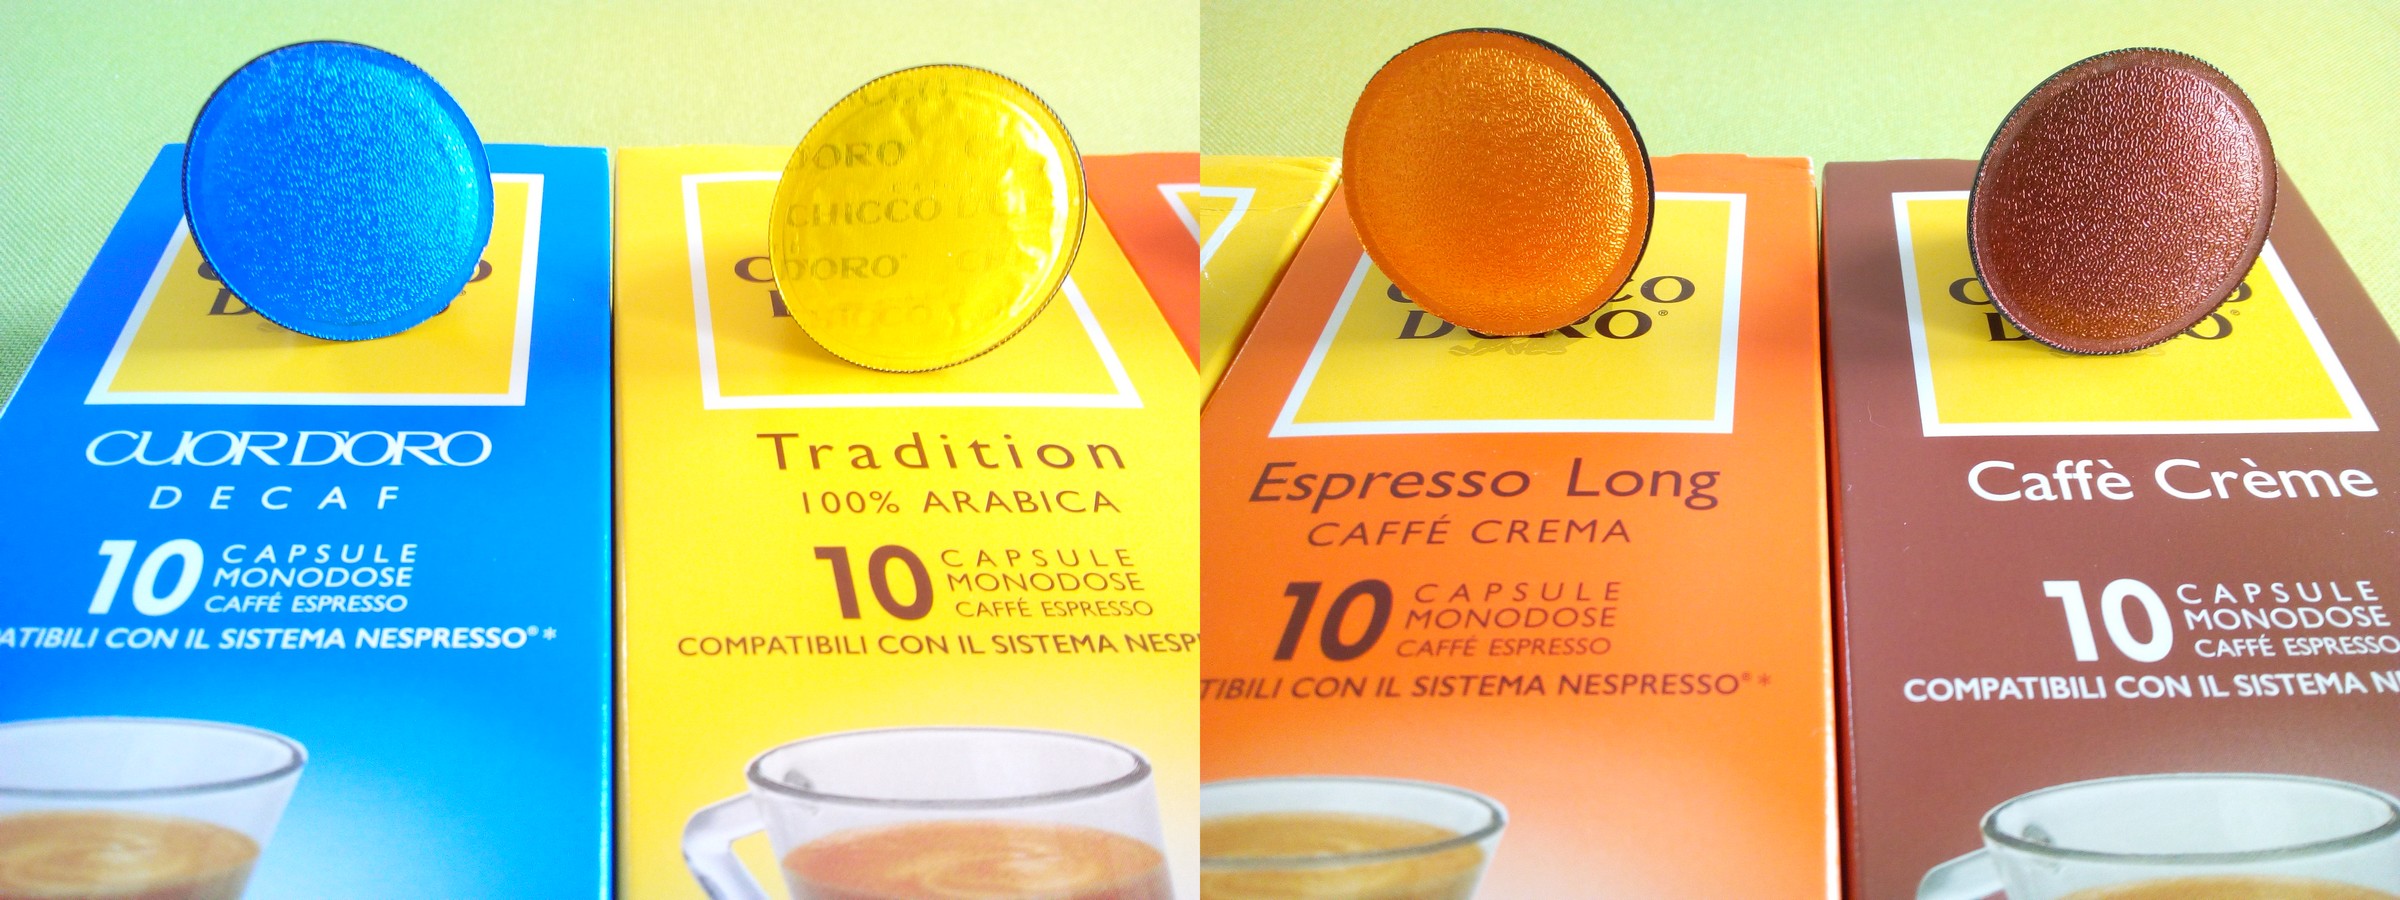 illy Lungo Classico - 10 Capsules pour Nespresso à 3,99 €